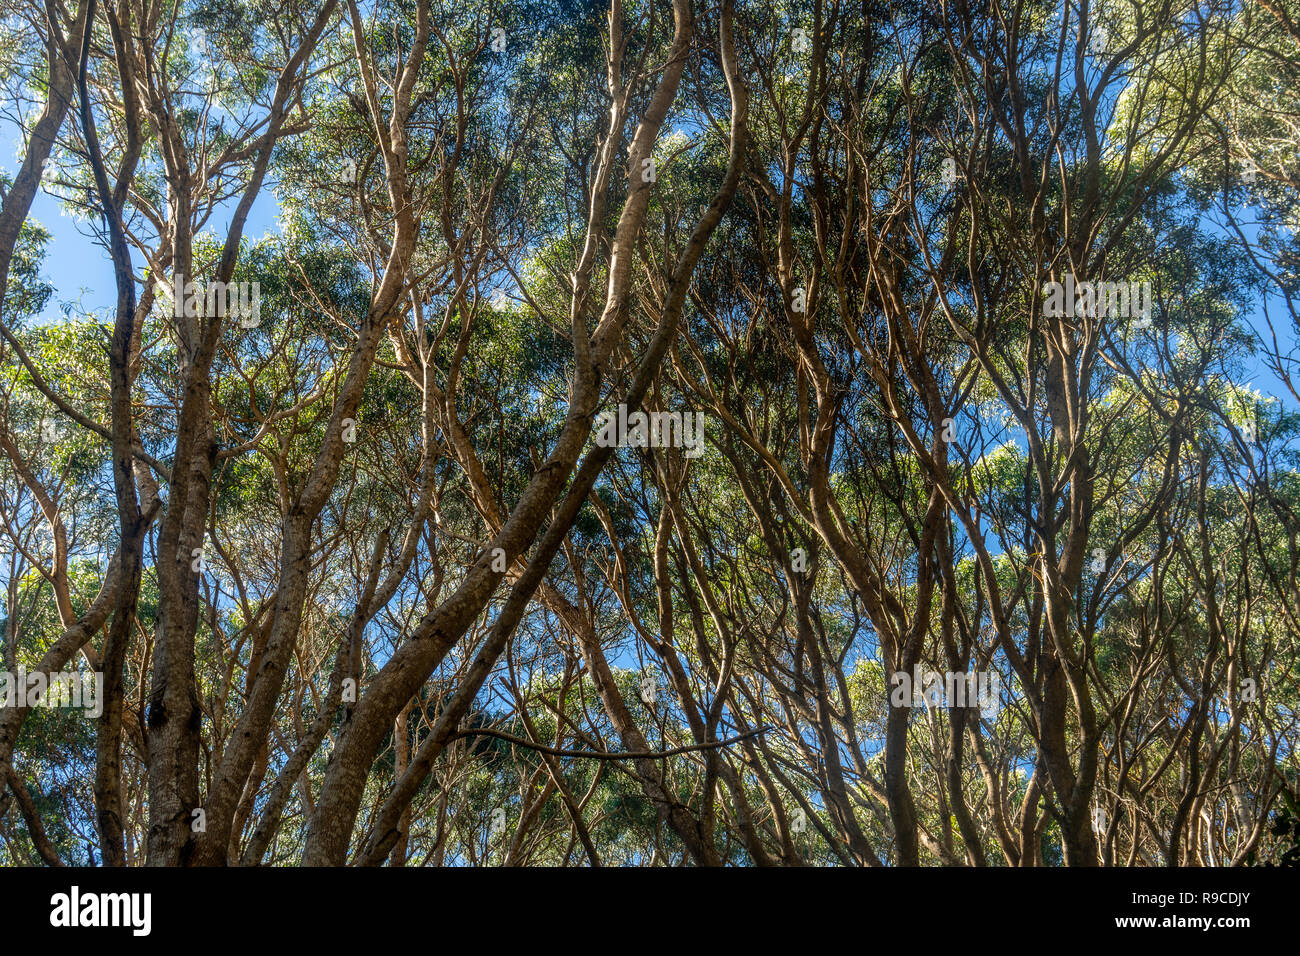 Koa tree towering overhead creating a cool shady environment. Kokee State Park, Kauai, Hawaii Stock Photo